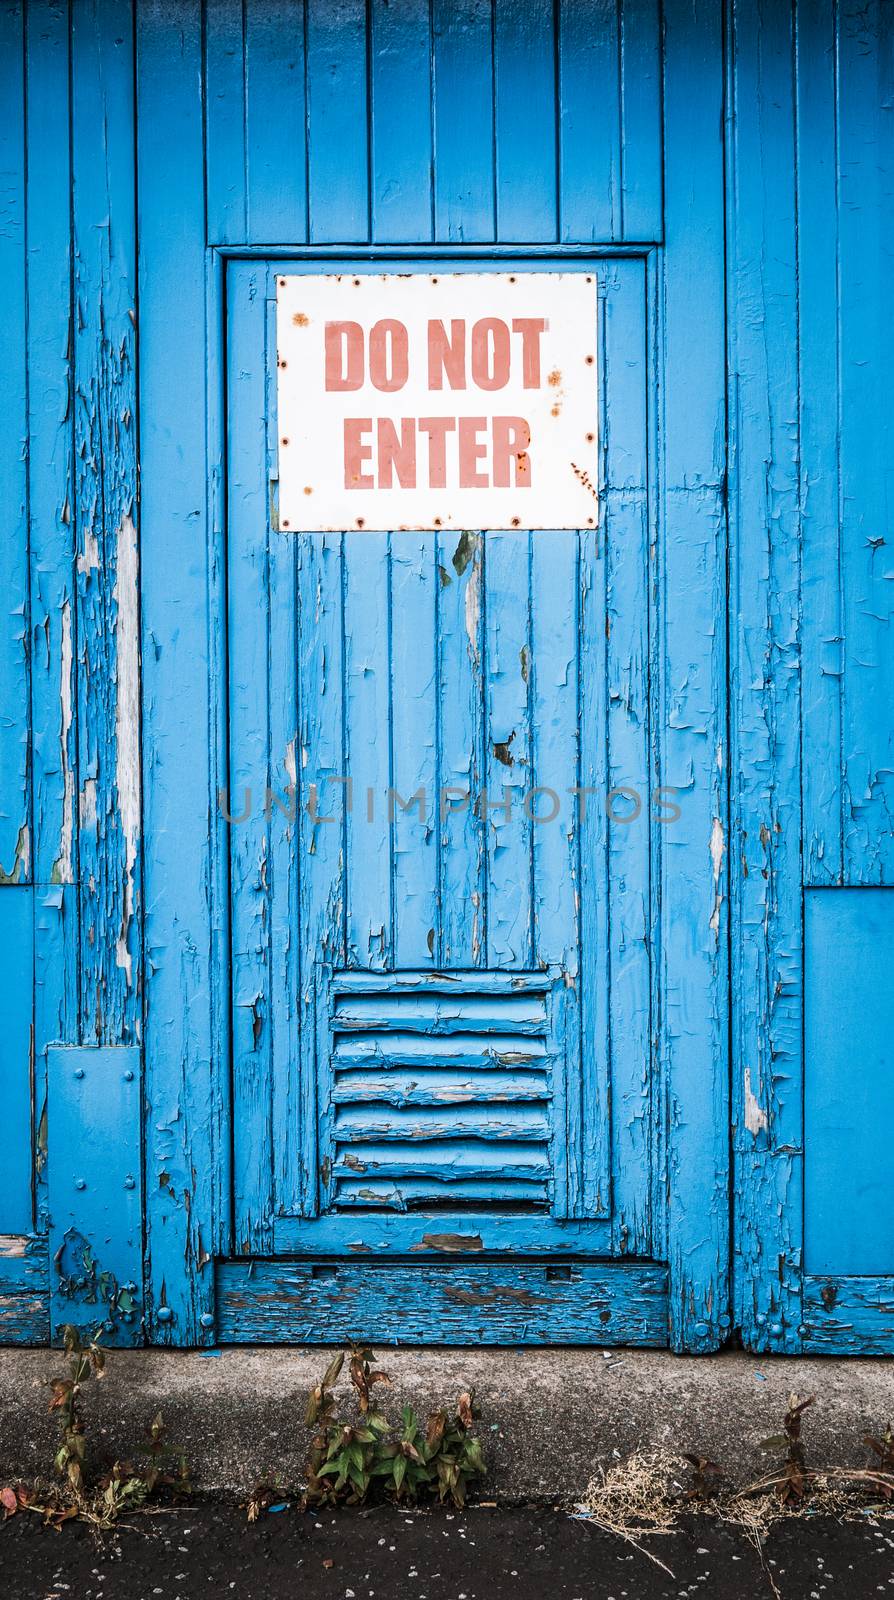 Grungy Rustic Blue Door iIth Do Not Enter Sign